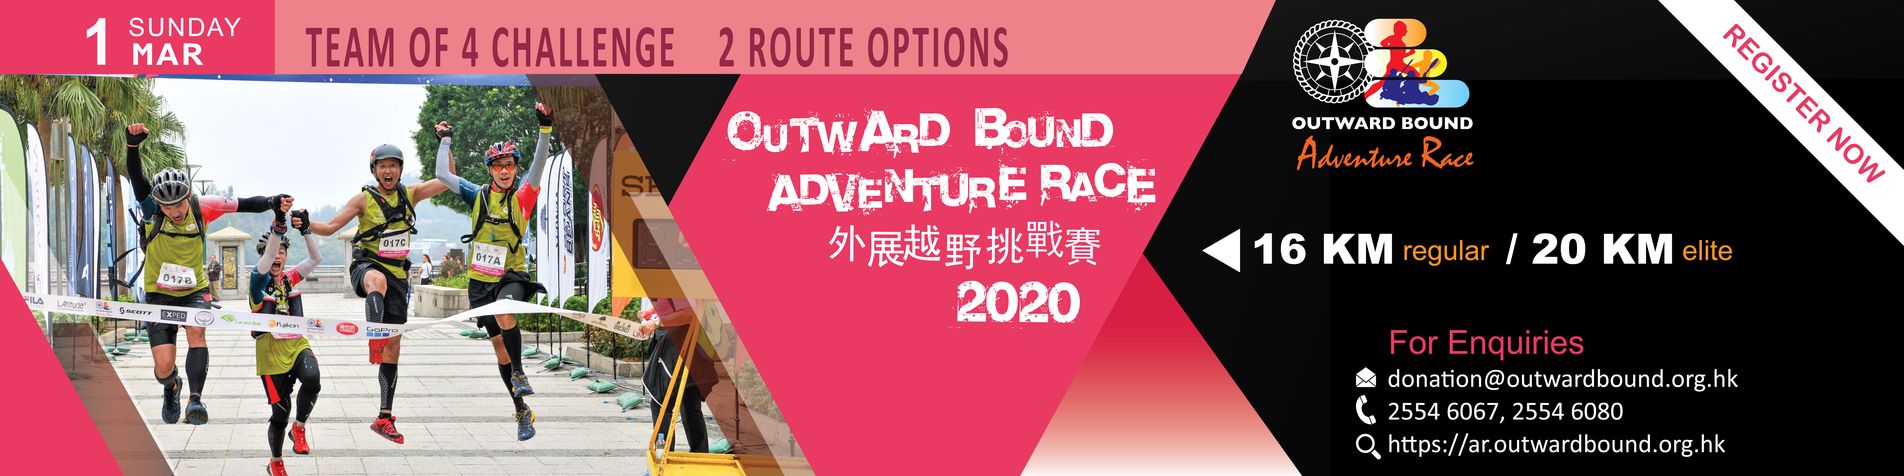 Outward Bound Adventure Race 2020